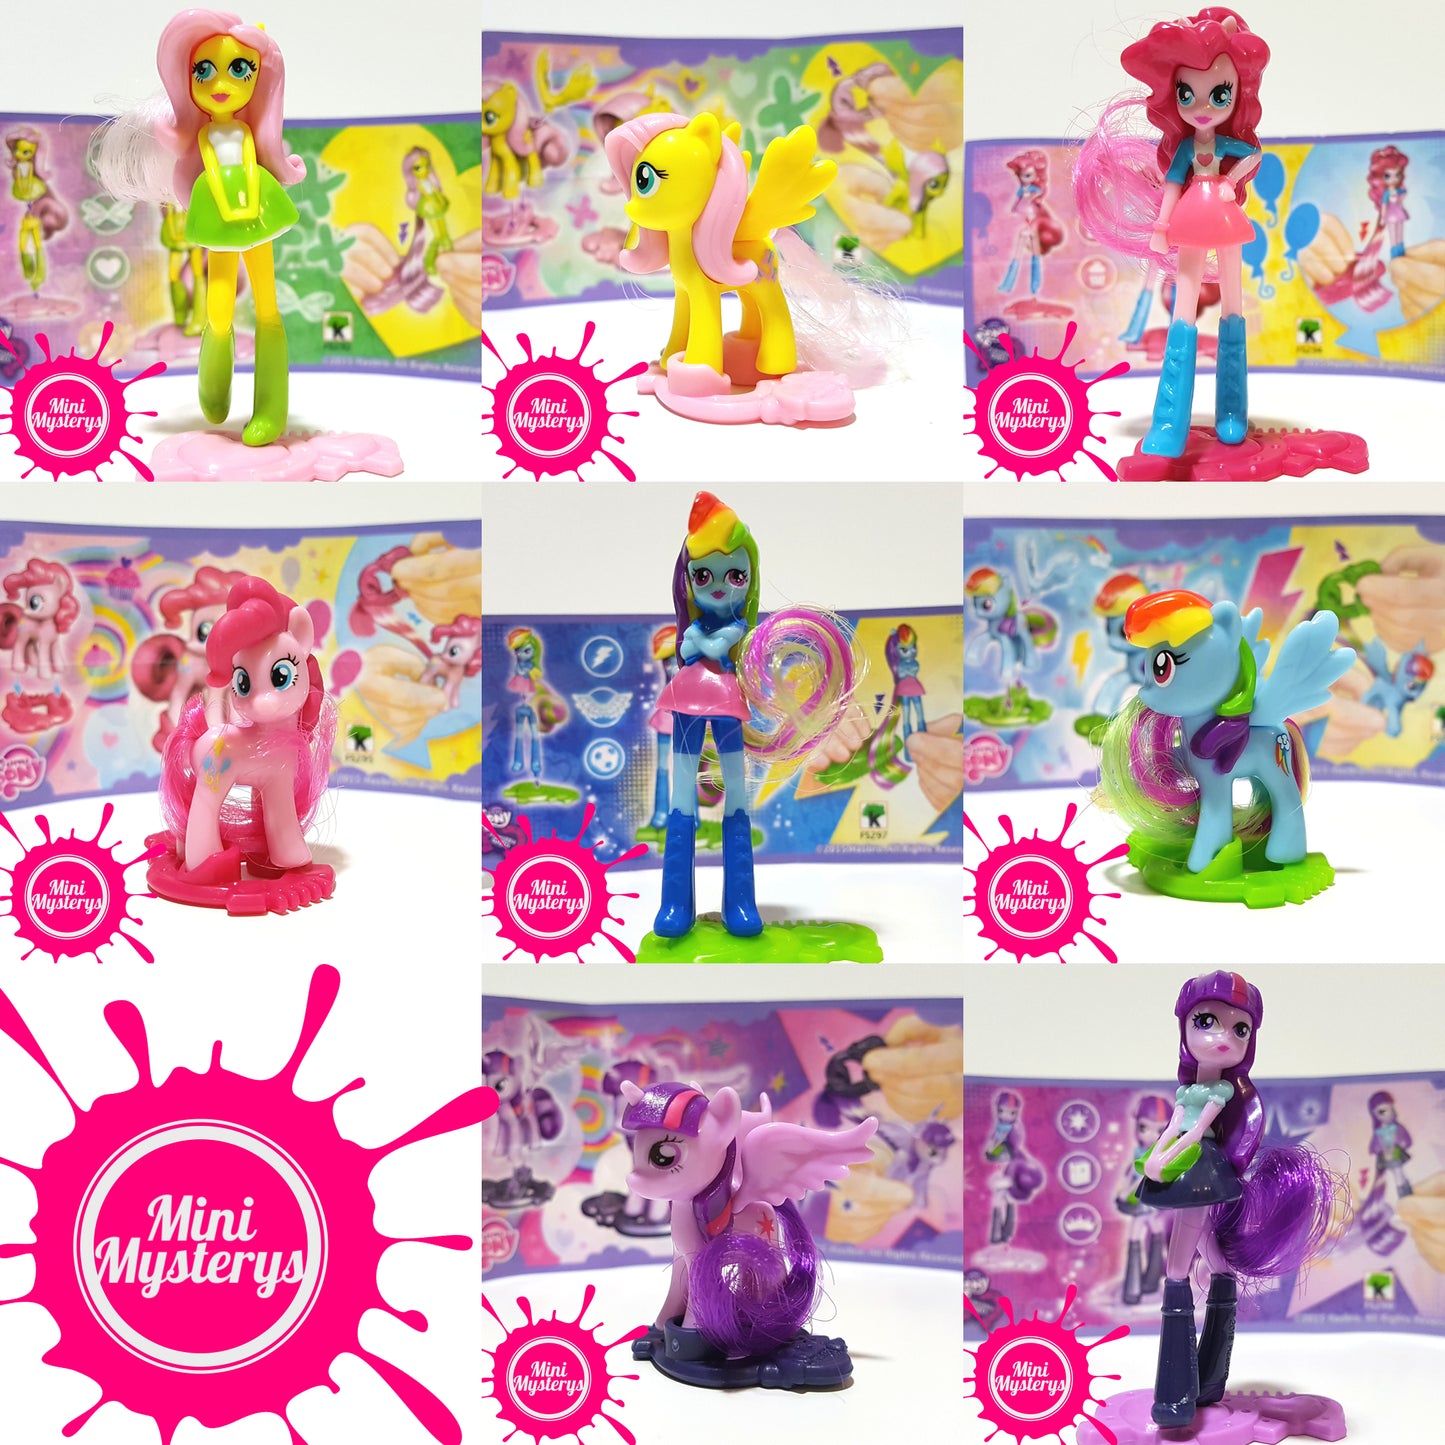 My Little Pony Kinder Surprise Figures - Choose Yours